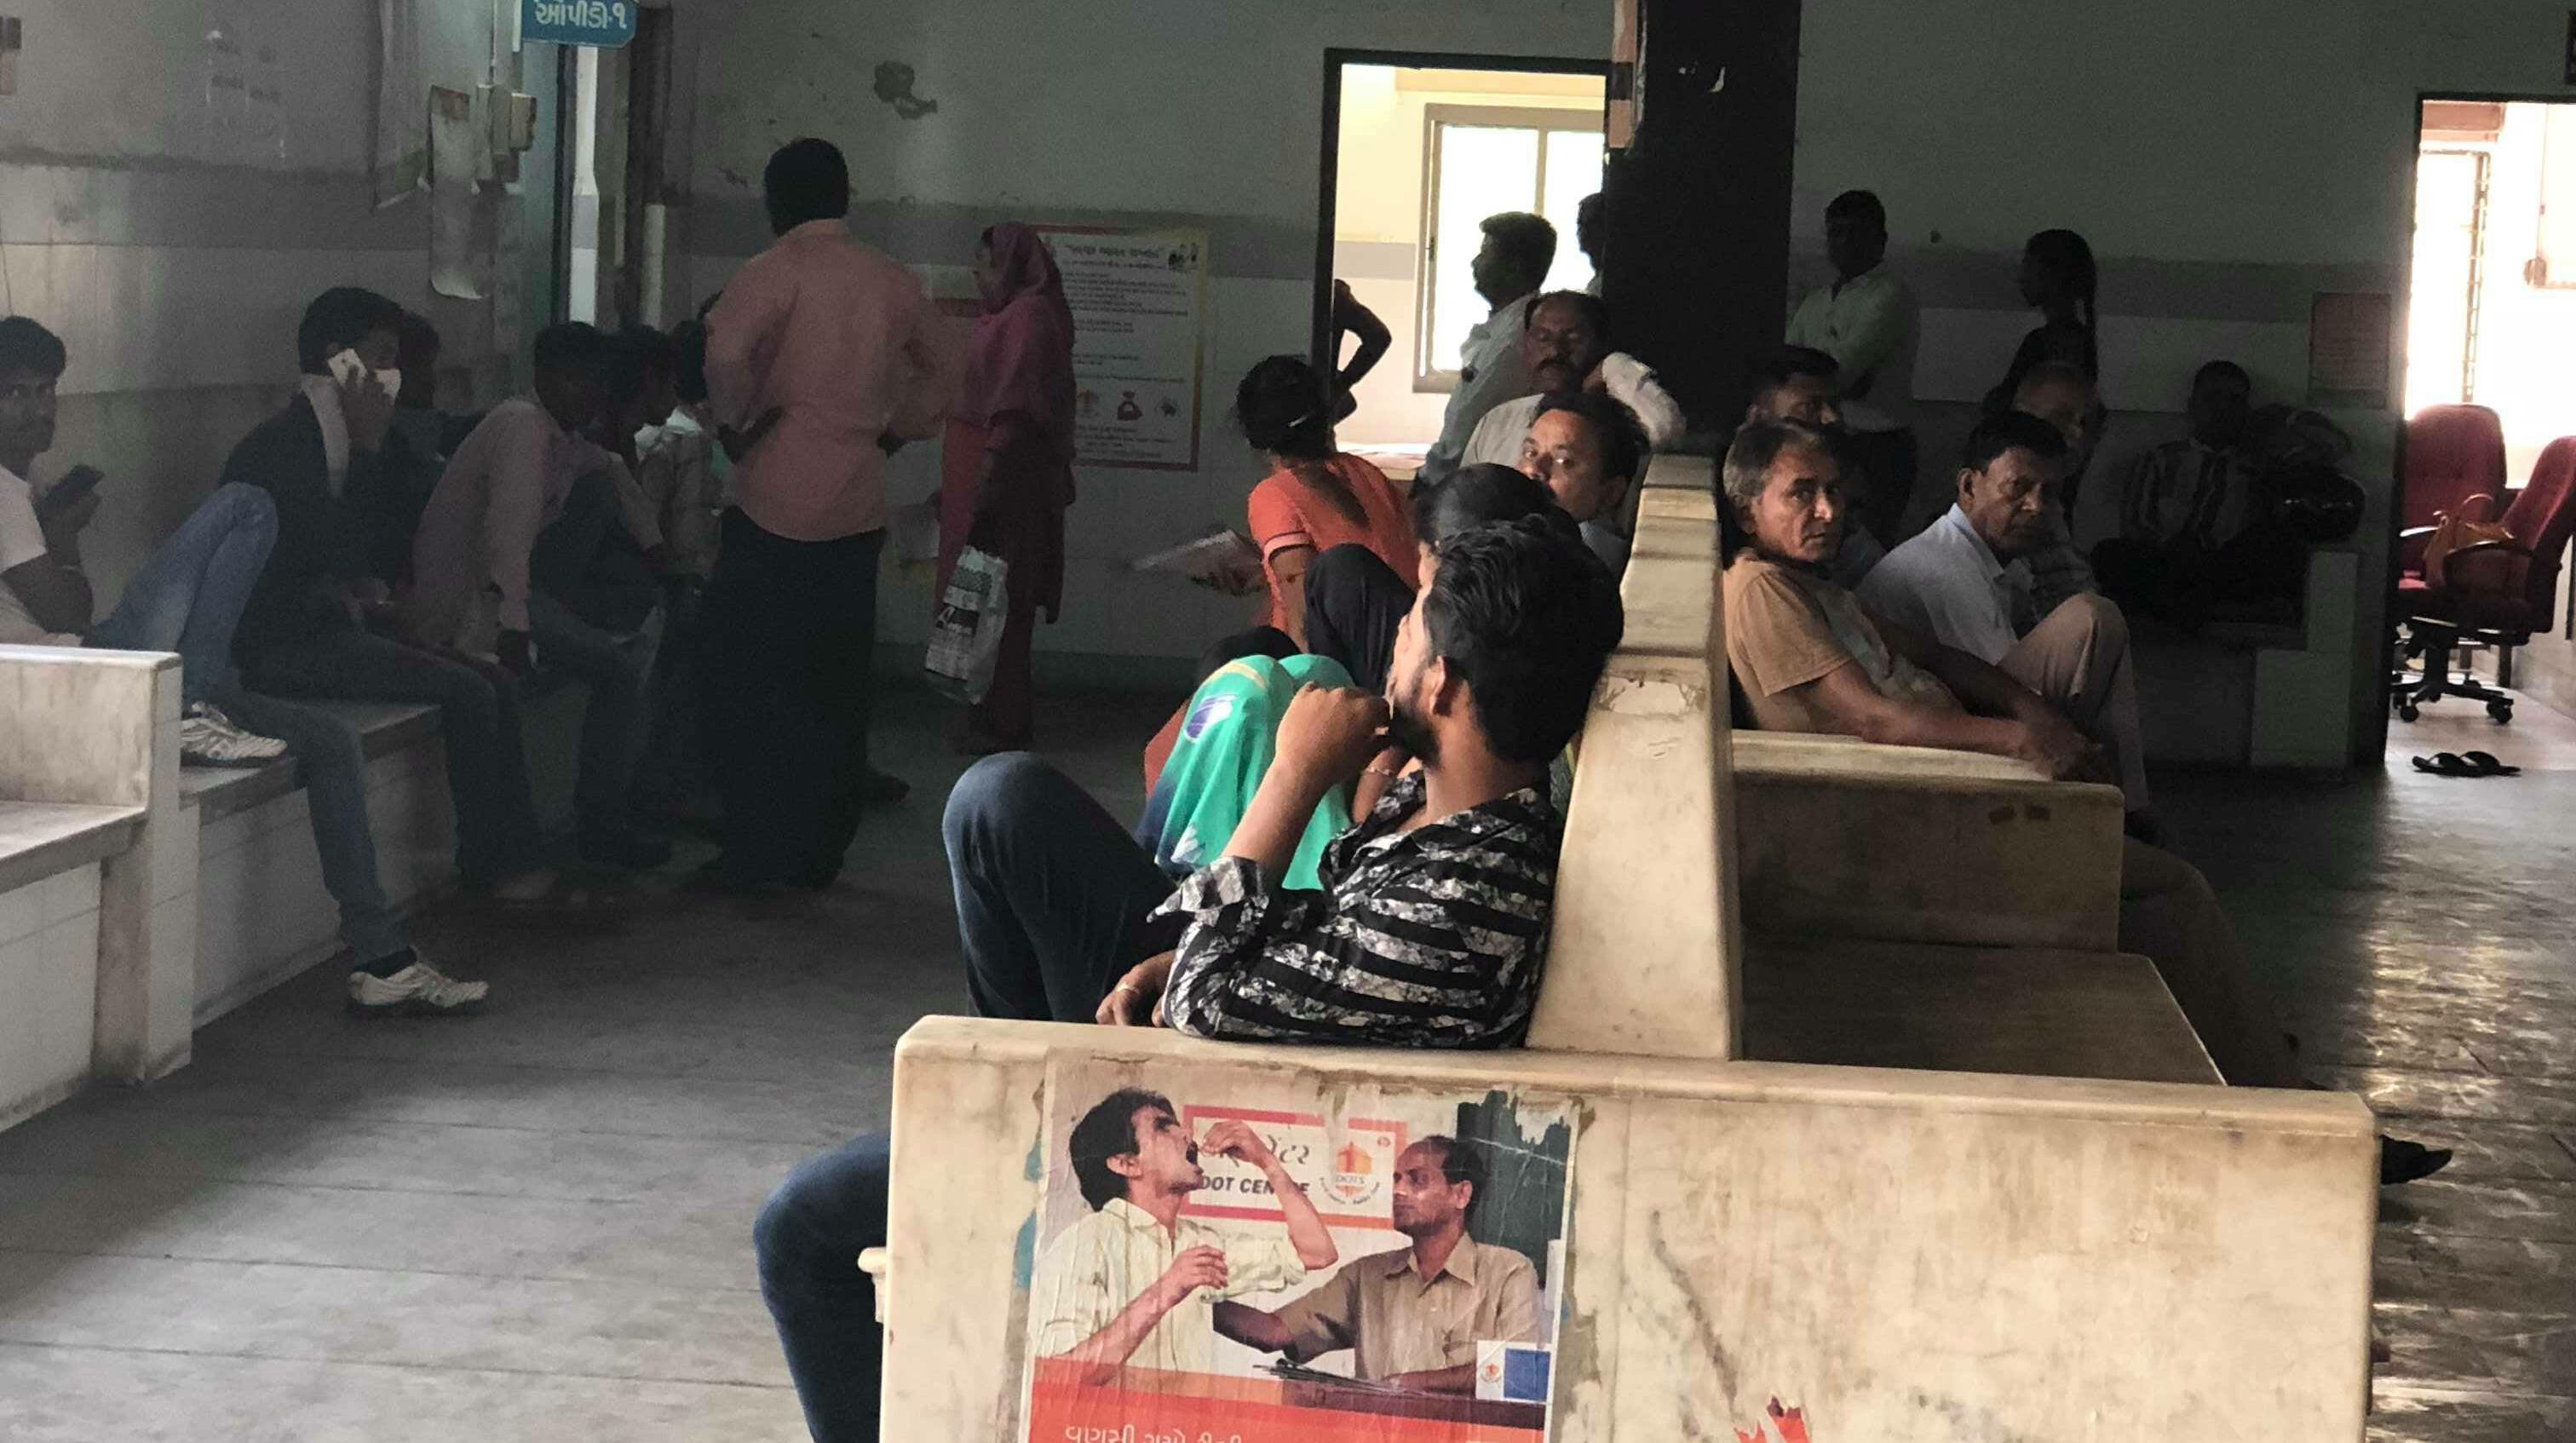 TB waiting room of a hospital in Ahmedabad, India credit Laura Rosu